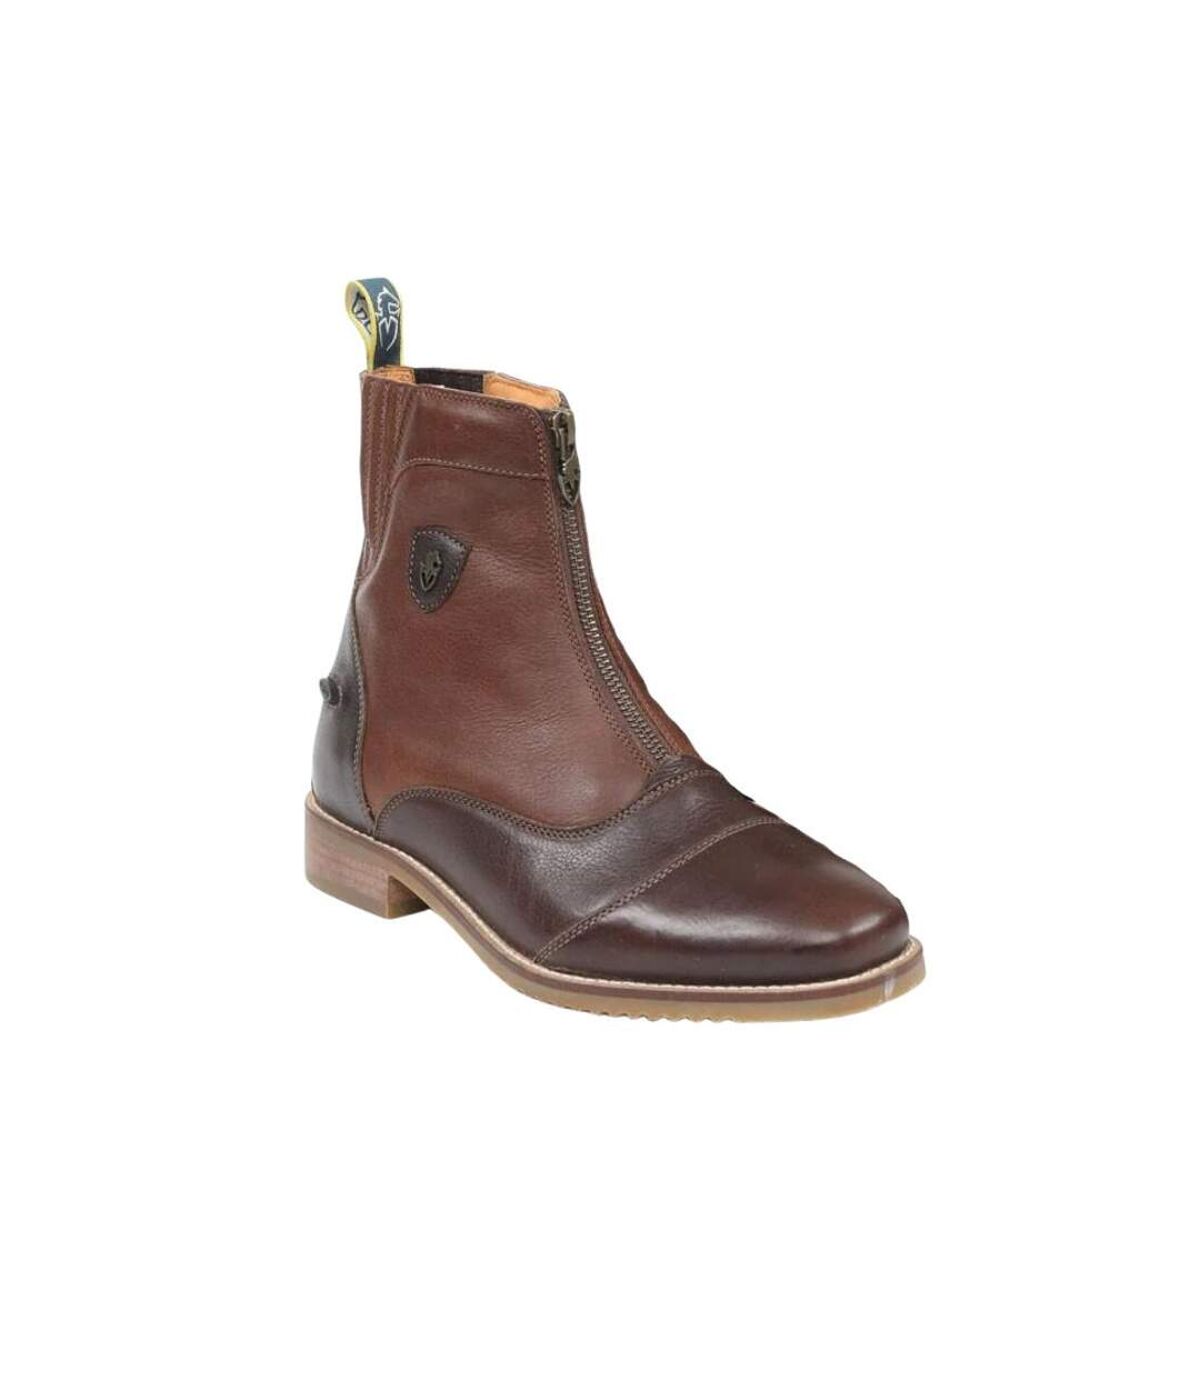 Moretta Womens/Ladies Viviana Zip Leather Paddock Boots (Chestnut Brown) - UTER668